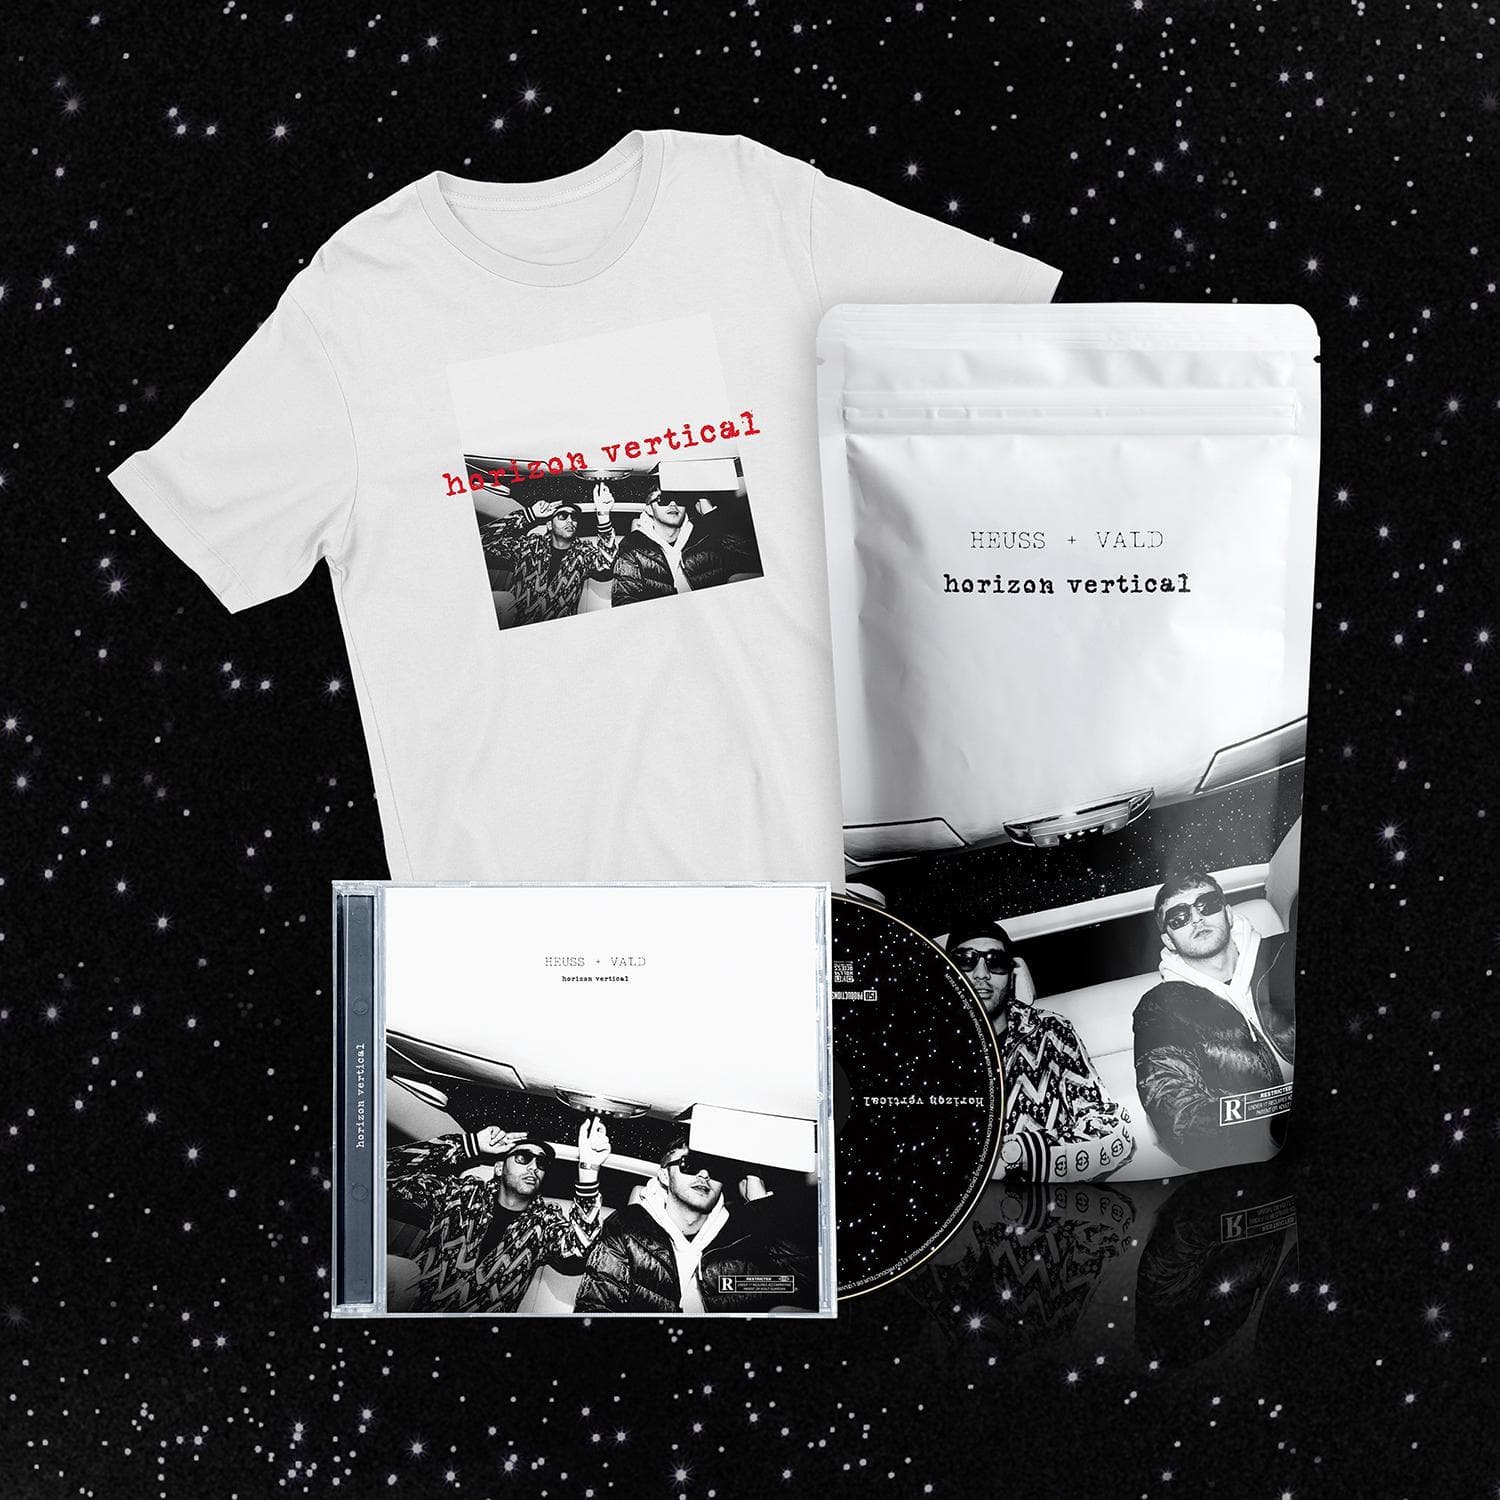 Horizon Vertical - Pack édition limitée (CD + T-shirt)